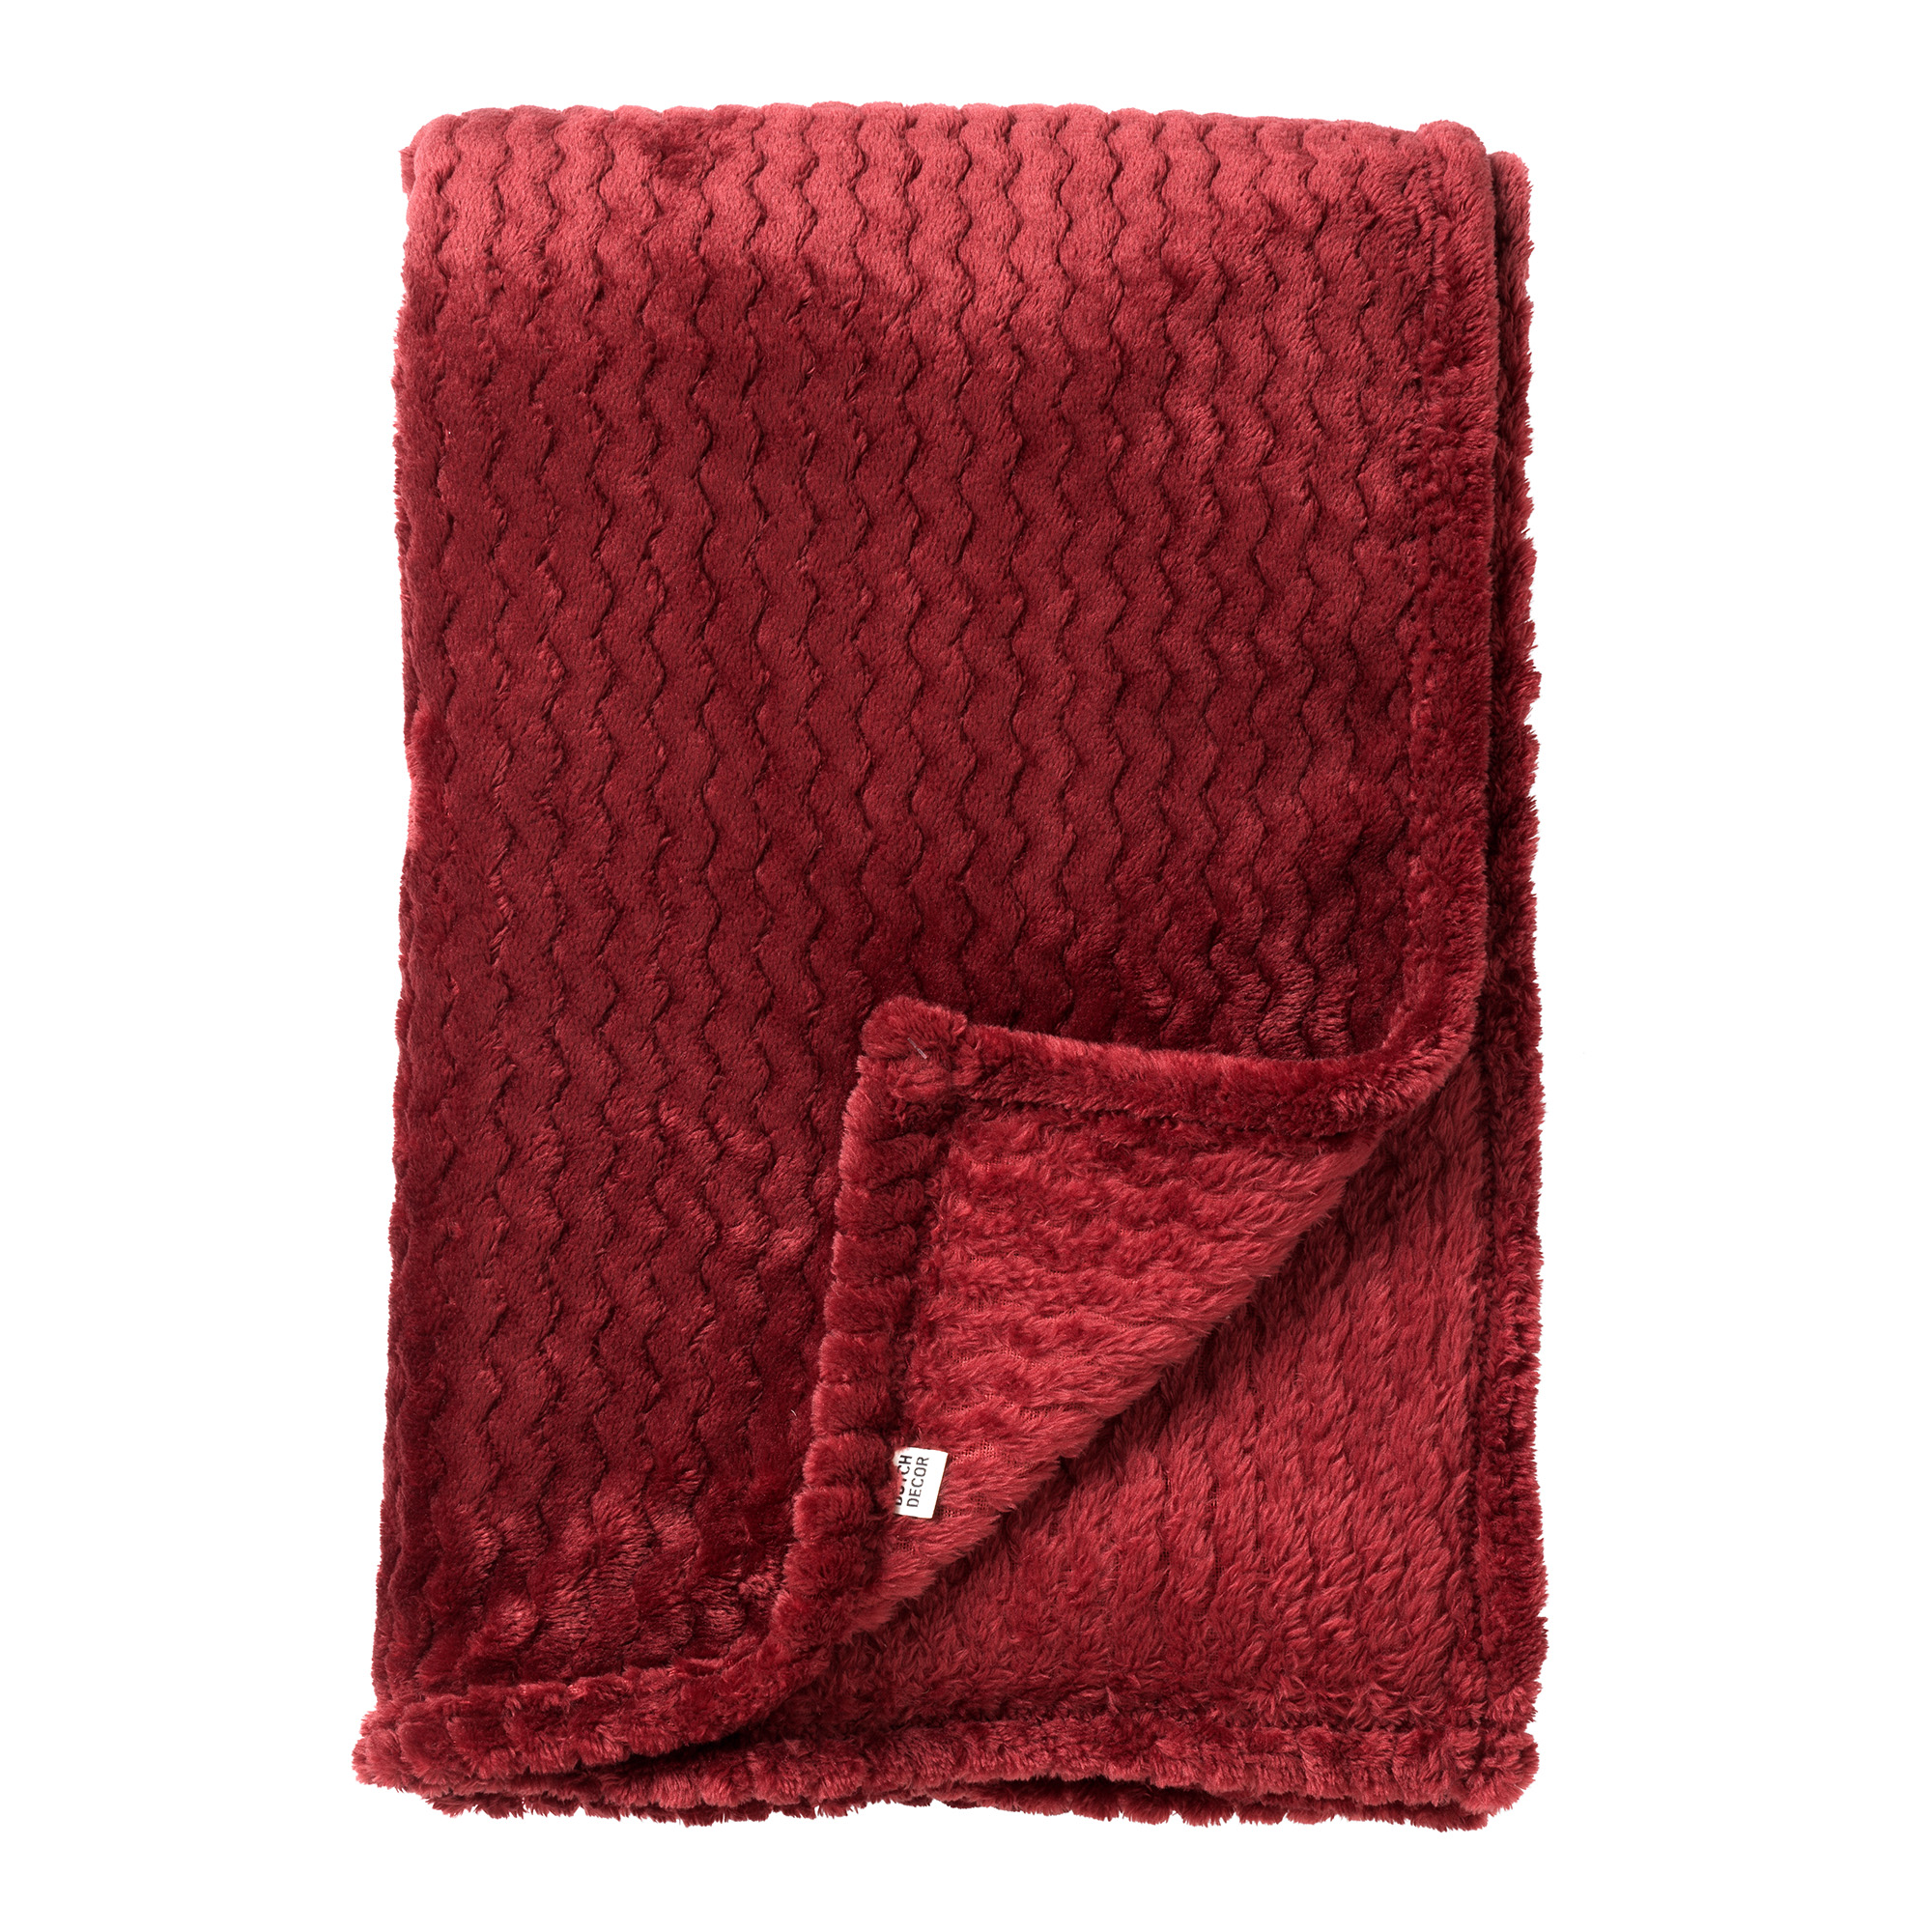 MARA - Plaid 150x200 cm - superzachte deken met zigzagpatroon - Merlot - rood bordeaux